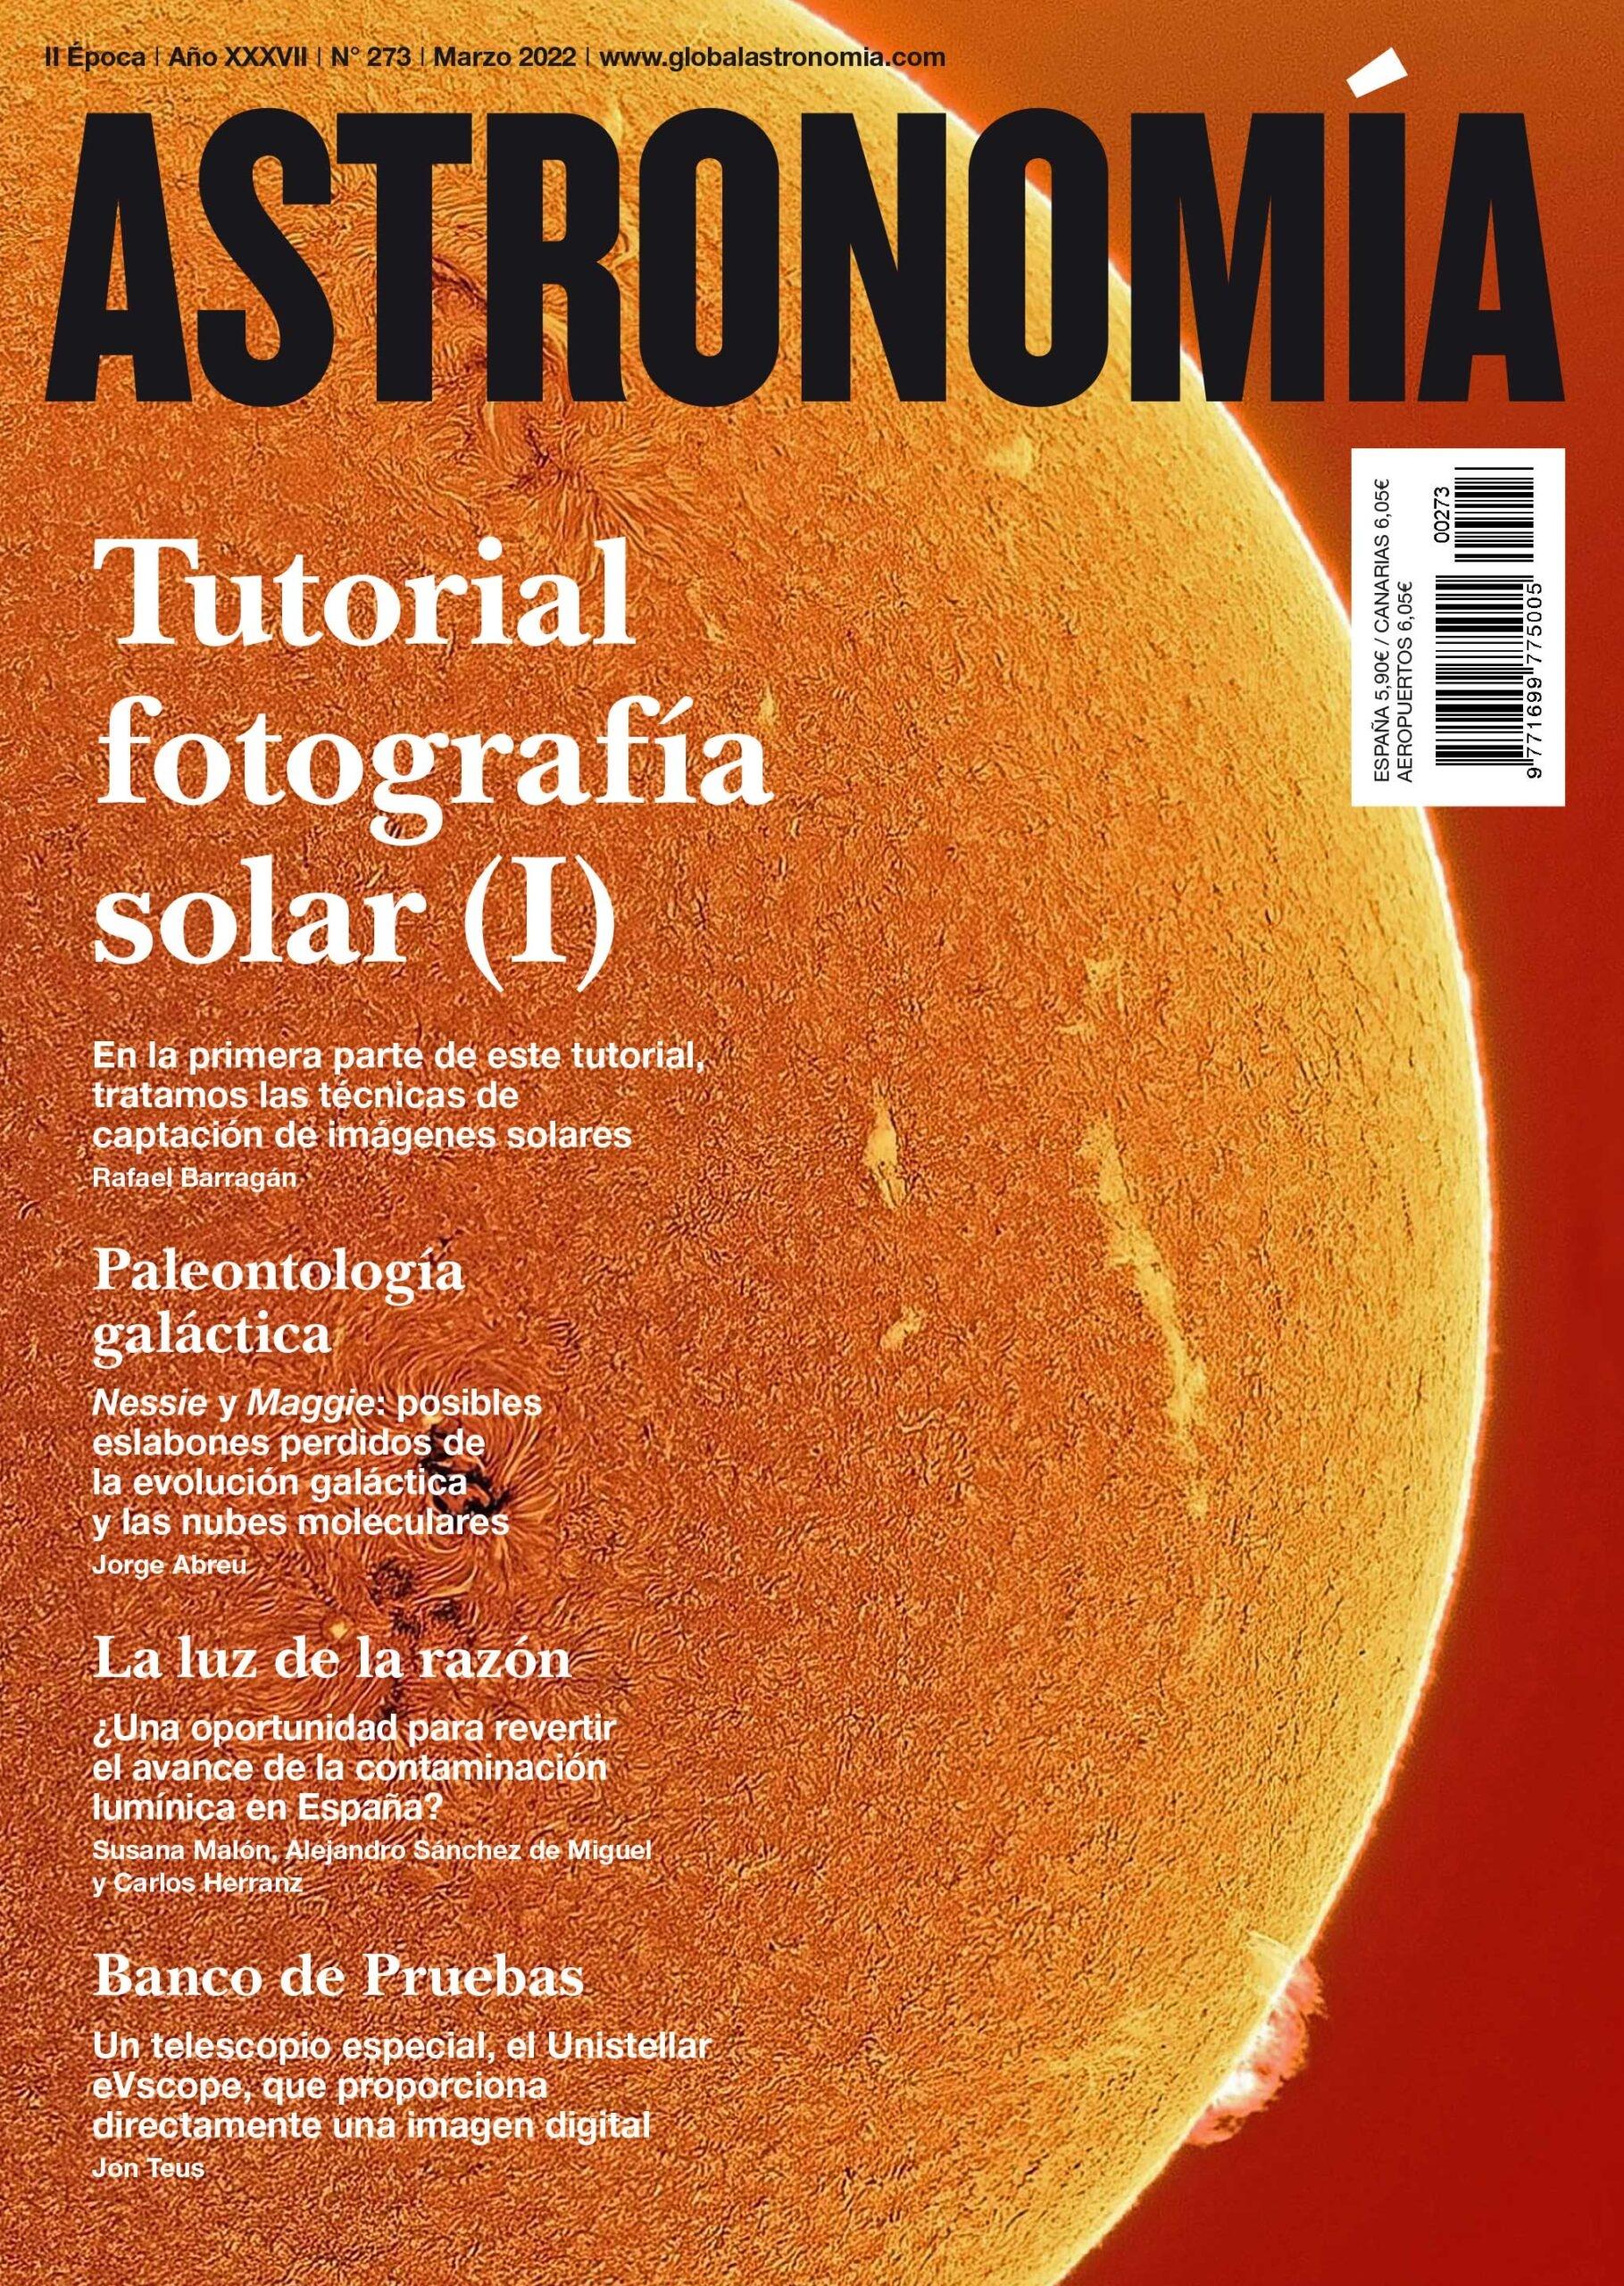 Astronomía nº 273 "Tutorial fotografía solar (I). Marzo 2022"